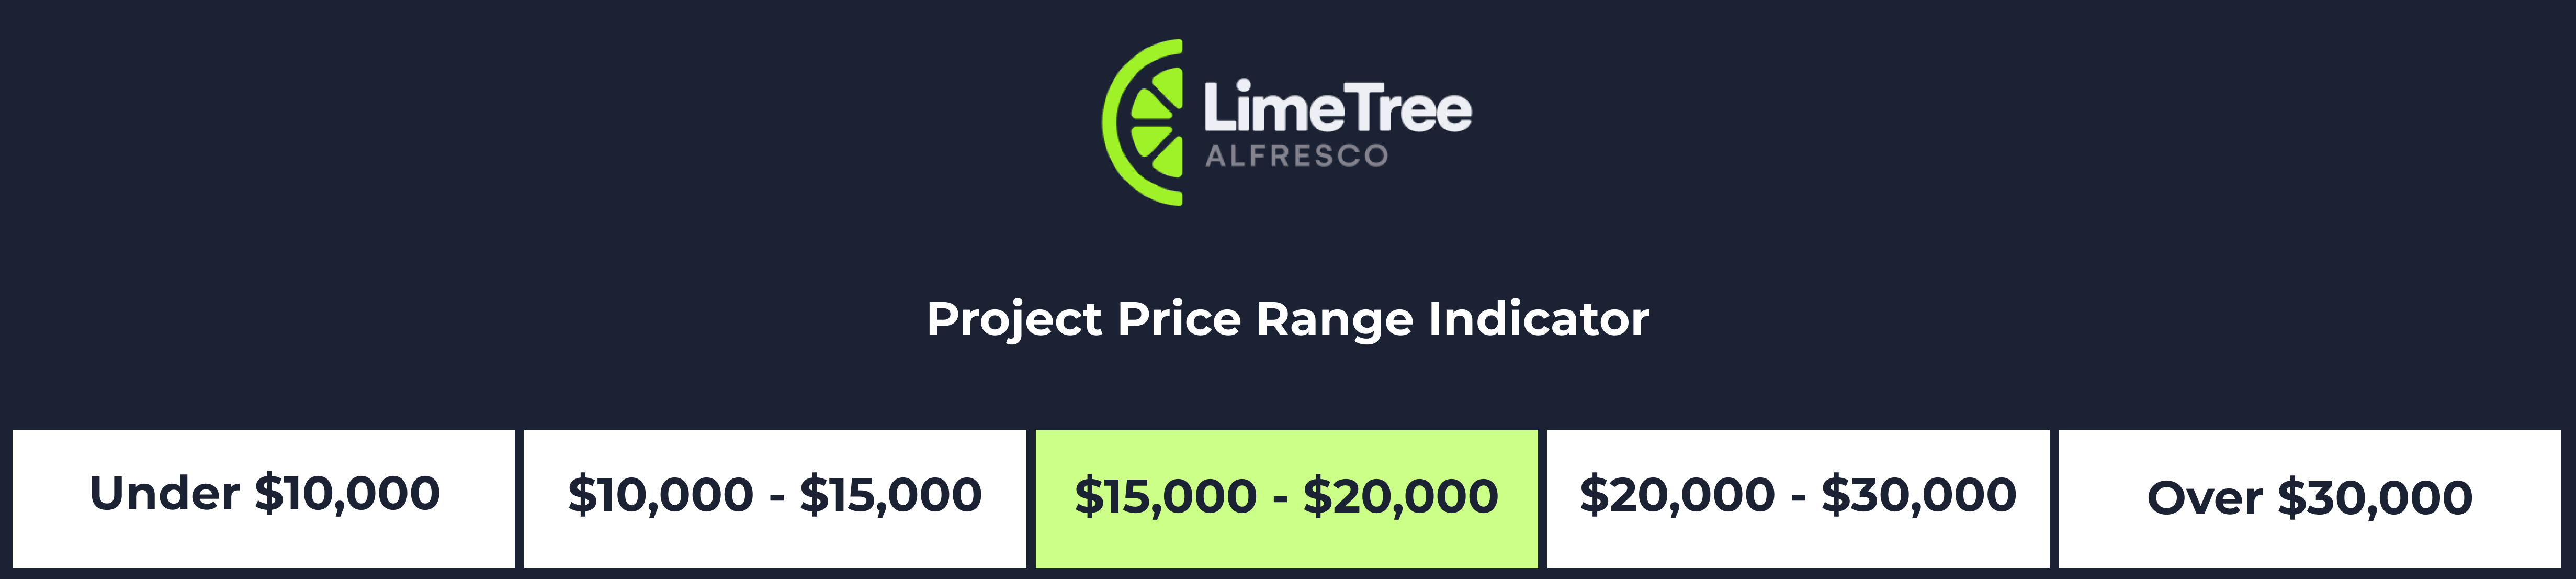 LTA - Project Price Range Indicator - $15,000 to $20,000